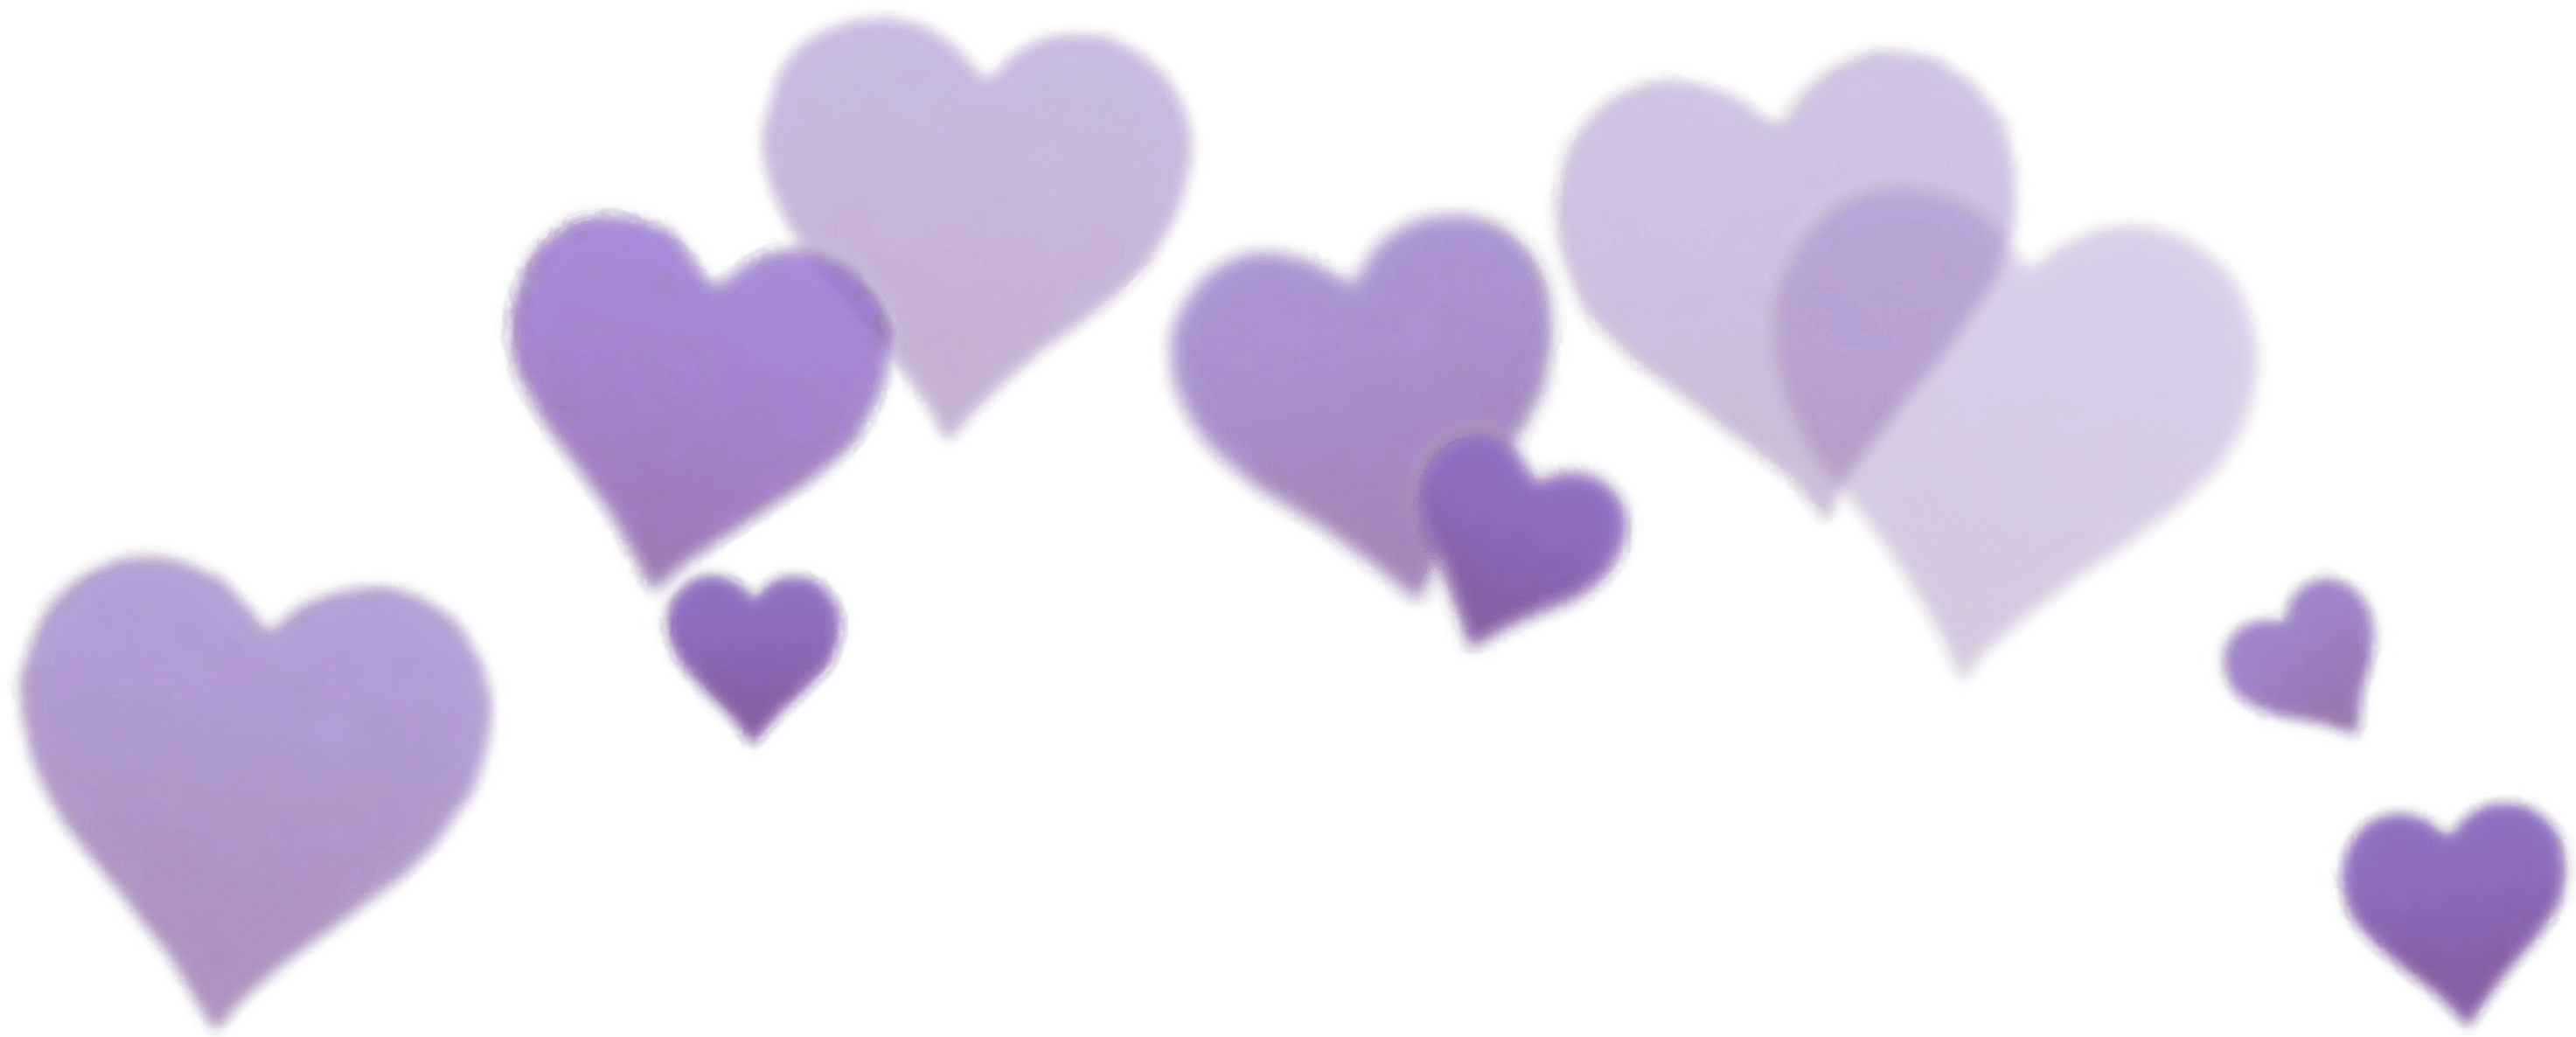 Purple Hearts On A Black Background